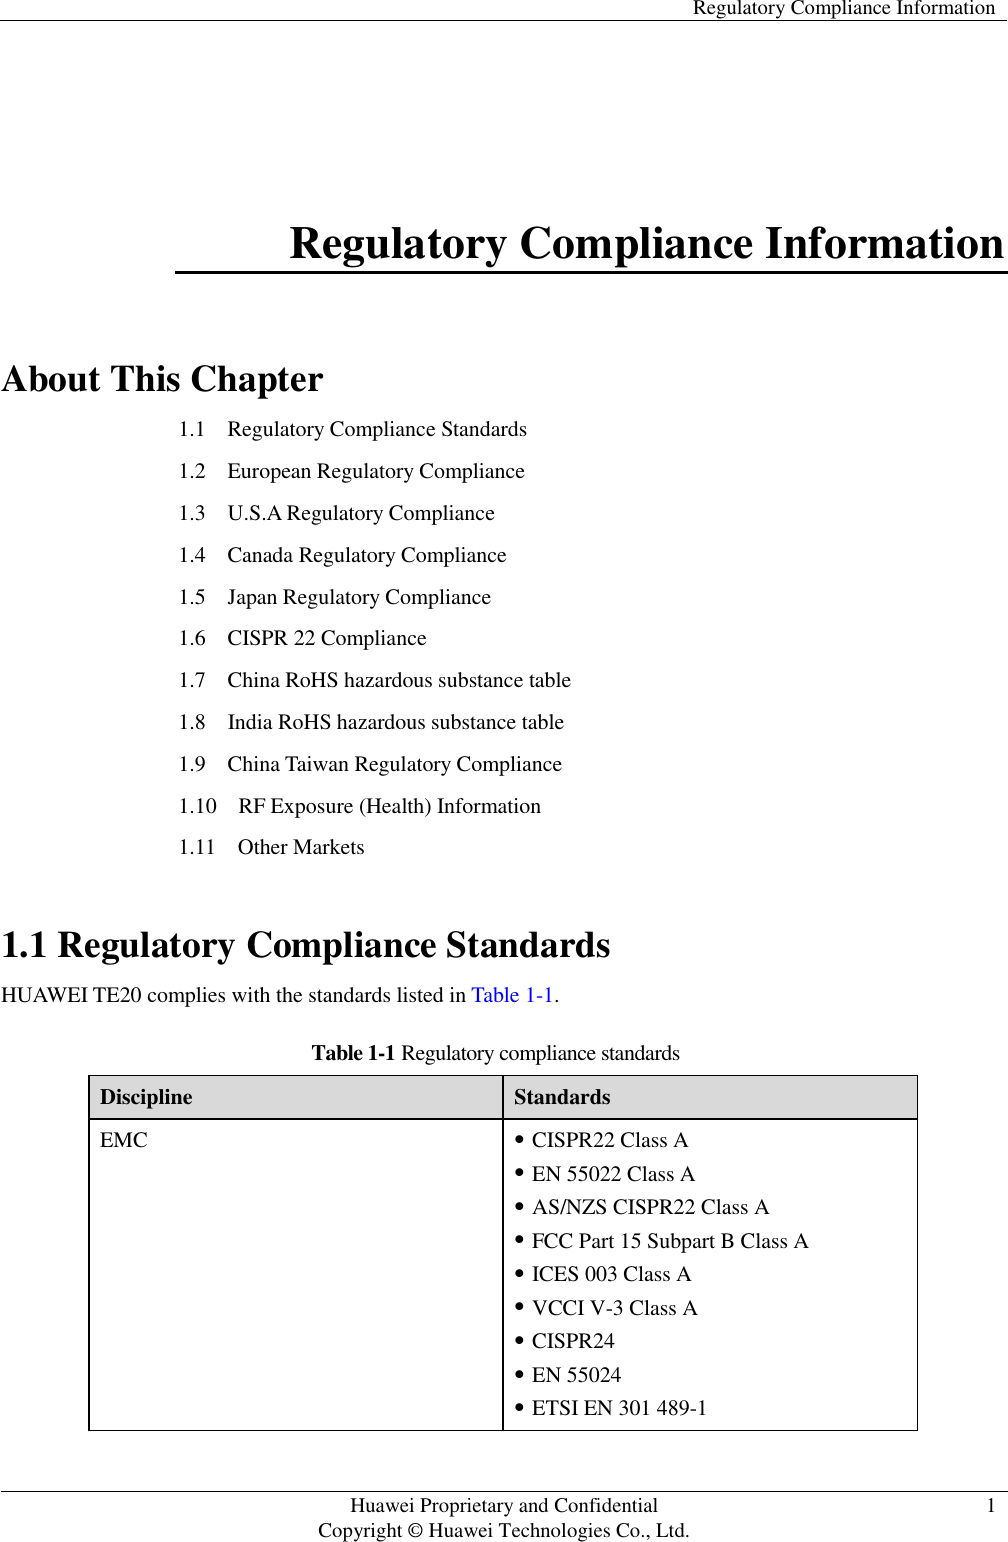   Regulatory Compliance Information   Huawei Proprietary and Confidential                                     Copyright © Huawei Technologies Co., Ltd. 1  Regulatory Compliance Information About This Chapter 1.1    Regulatory Compliance Standards 1.2    European Regulatory Compliance 1.3    U.S.A Regulatory Compliance 1.4    Canada Regulatory Compliance 1.5  Japan Regulatory Compliance 1.6  CISPR 22 Compliance 1.7    China RoHS hazardous substance table 1.8    India RoHS hazardous substance table 1.9    China Taiwan Regulatory Compliance 1.10    RF Exposure (Health) Information 1.11    Other Markets 1.1 Regulatory Compliance Standards HUAWEI TE20 complies with the standards listed in Table 1-1. Table 1-1 Regulatory compliance standards Discipline Standards EMC  CISPR22 Class A  EN 55022 Class A  AS/NZS CISPR22 Class A  FCC Part 15 Subpart B Class A  ICES 003 Class A  VCCI V-3 Class A  CISPR24  EN 55024  ETSI EN 301 489-1   